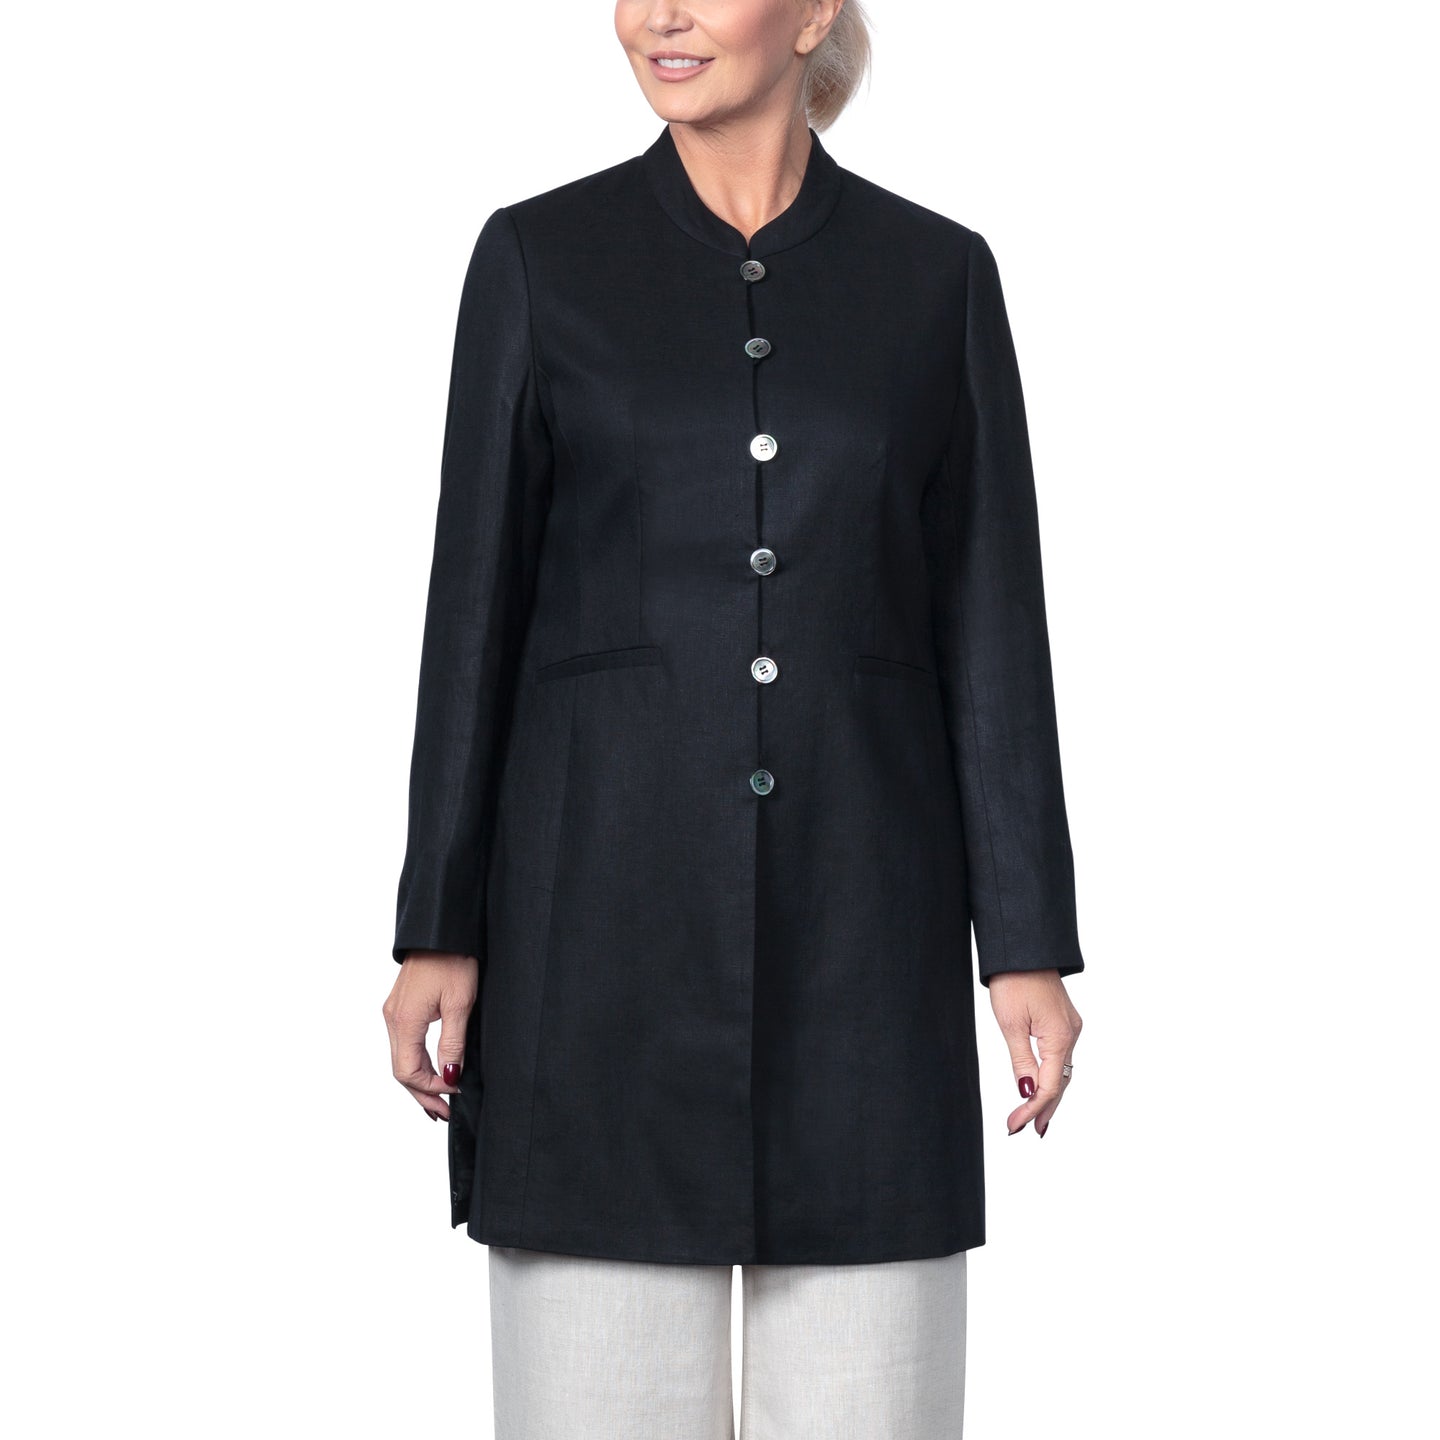 East Victoire Linen Nehru Collar Longline Jacket